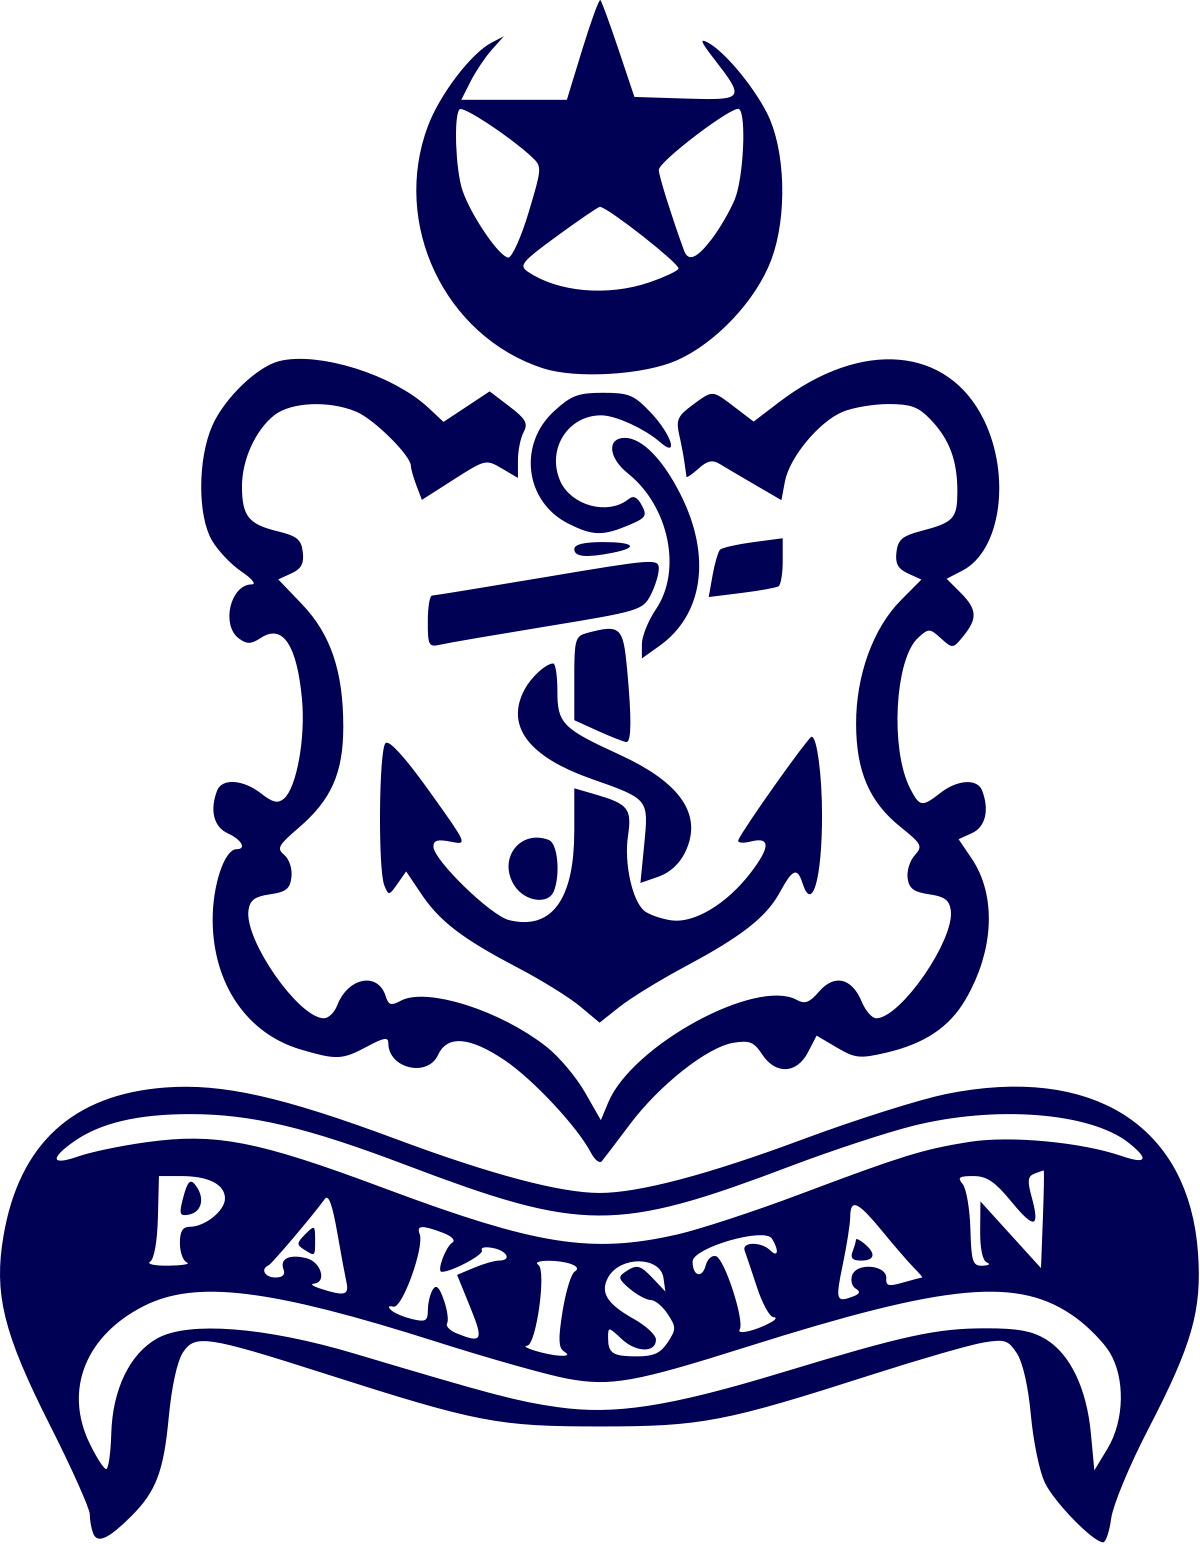 Navy's Logo - Pakistan Navy